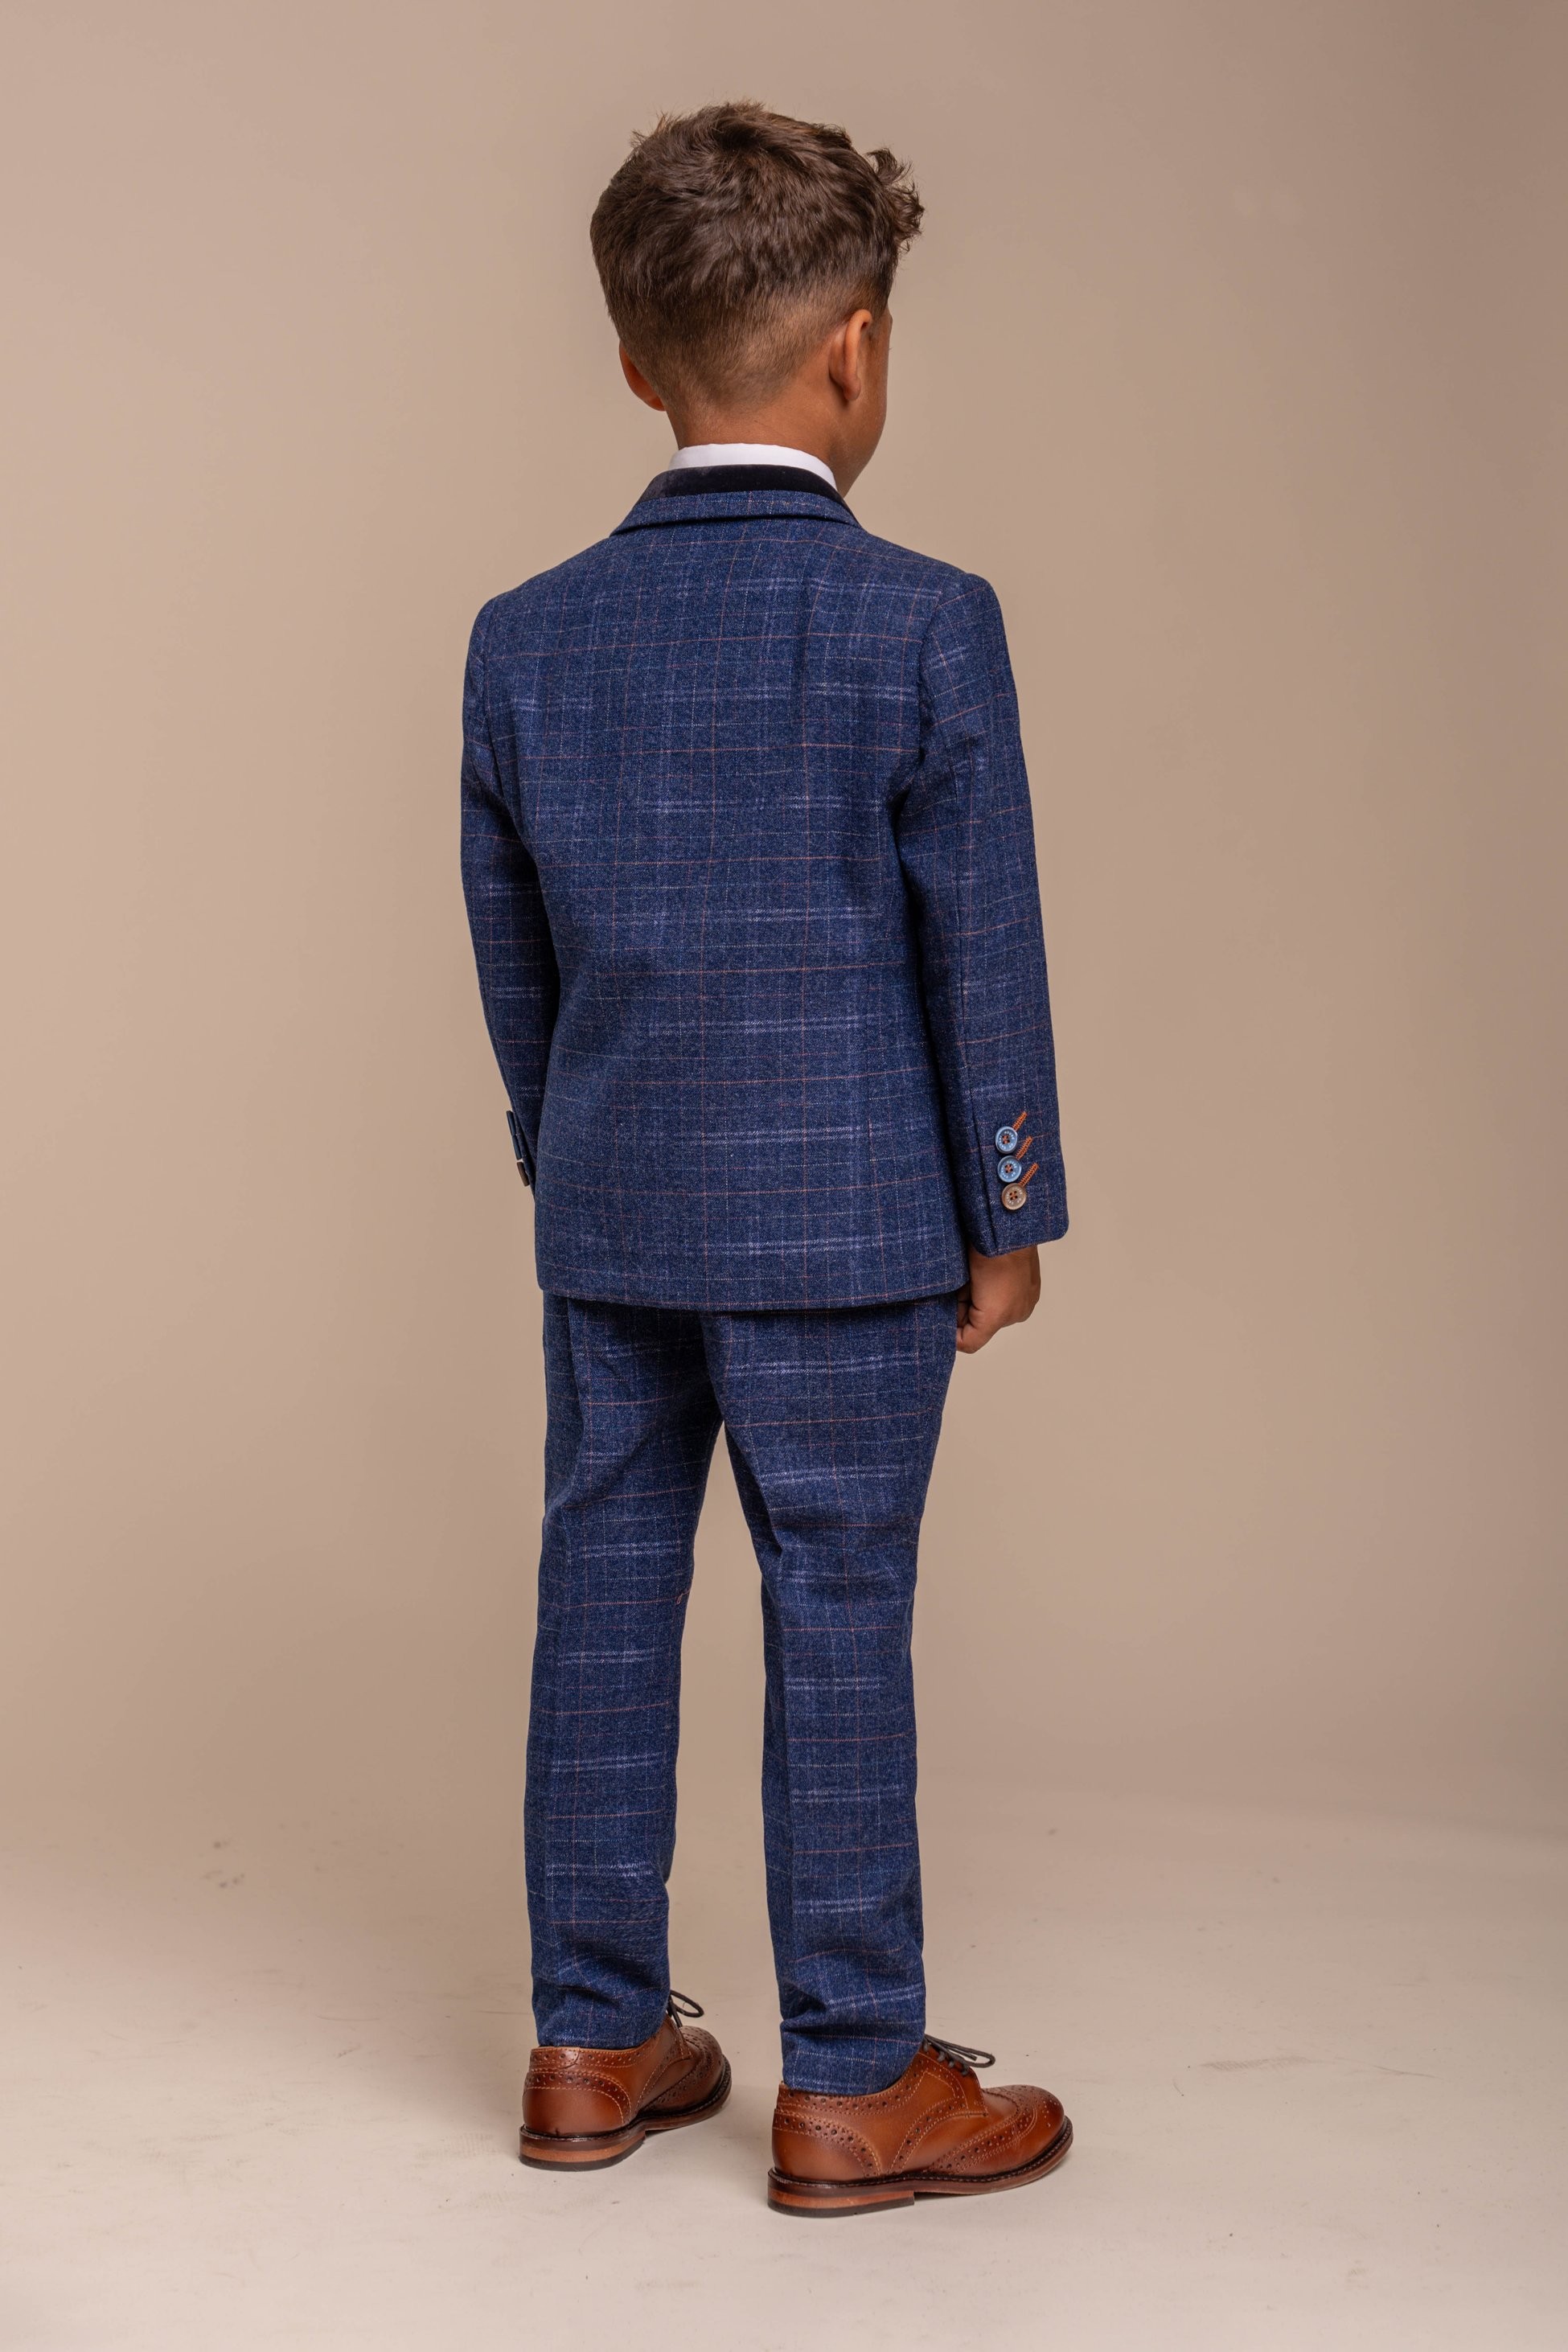 Jungen Tweed Karo Navy Slim Fit Anzug - KAISER - Navy blau